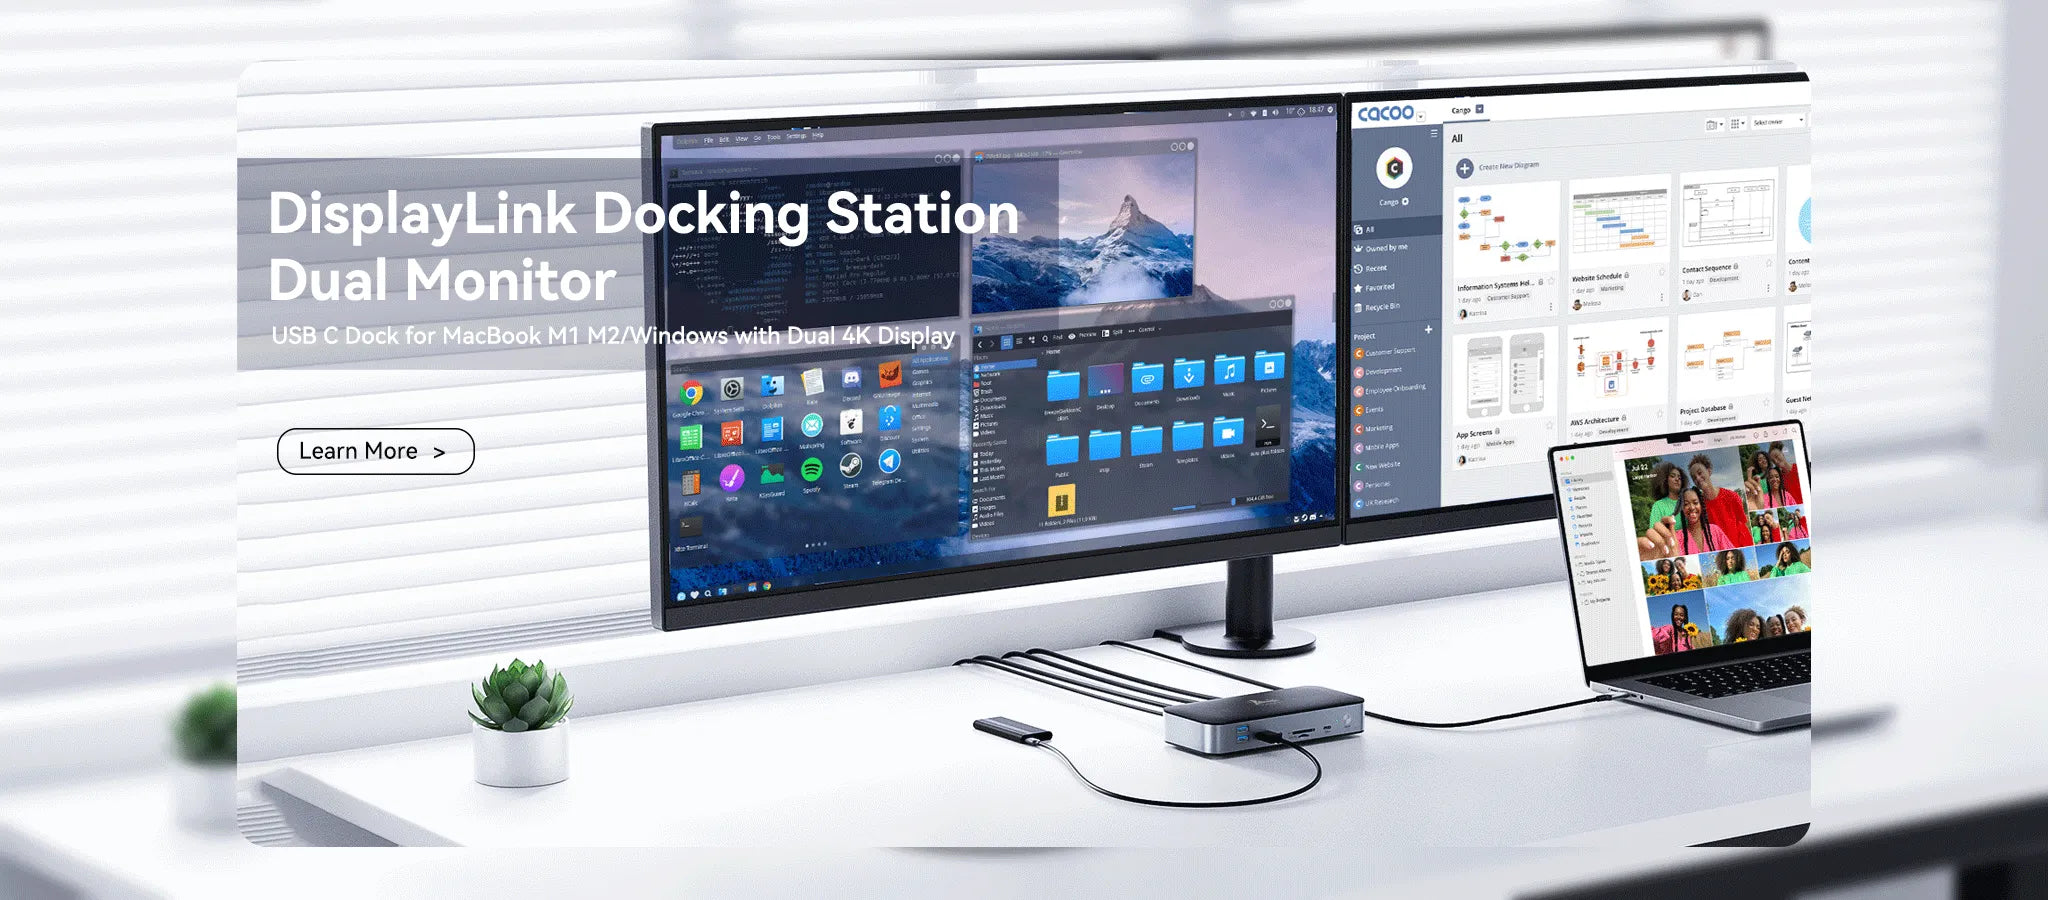 USB C Dock for MacBook M1 M2/Windows with Dual 4K Display